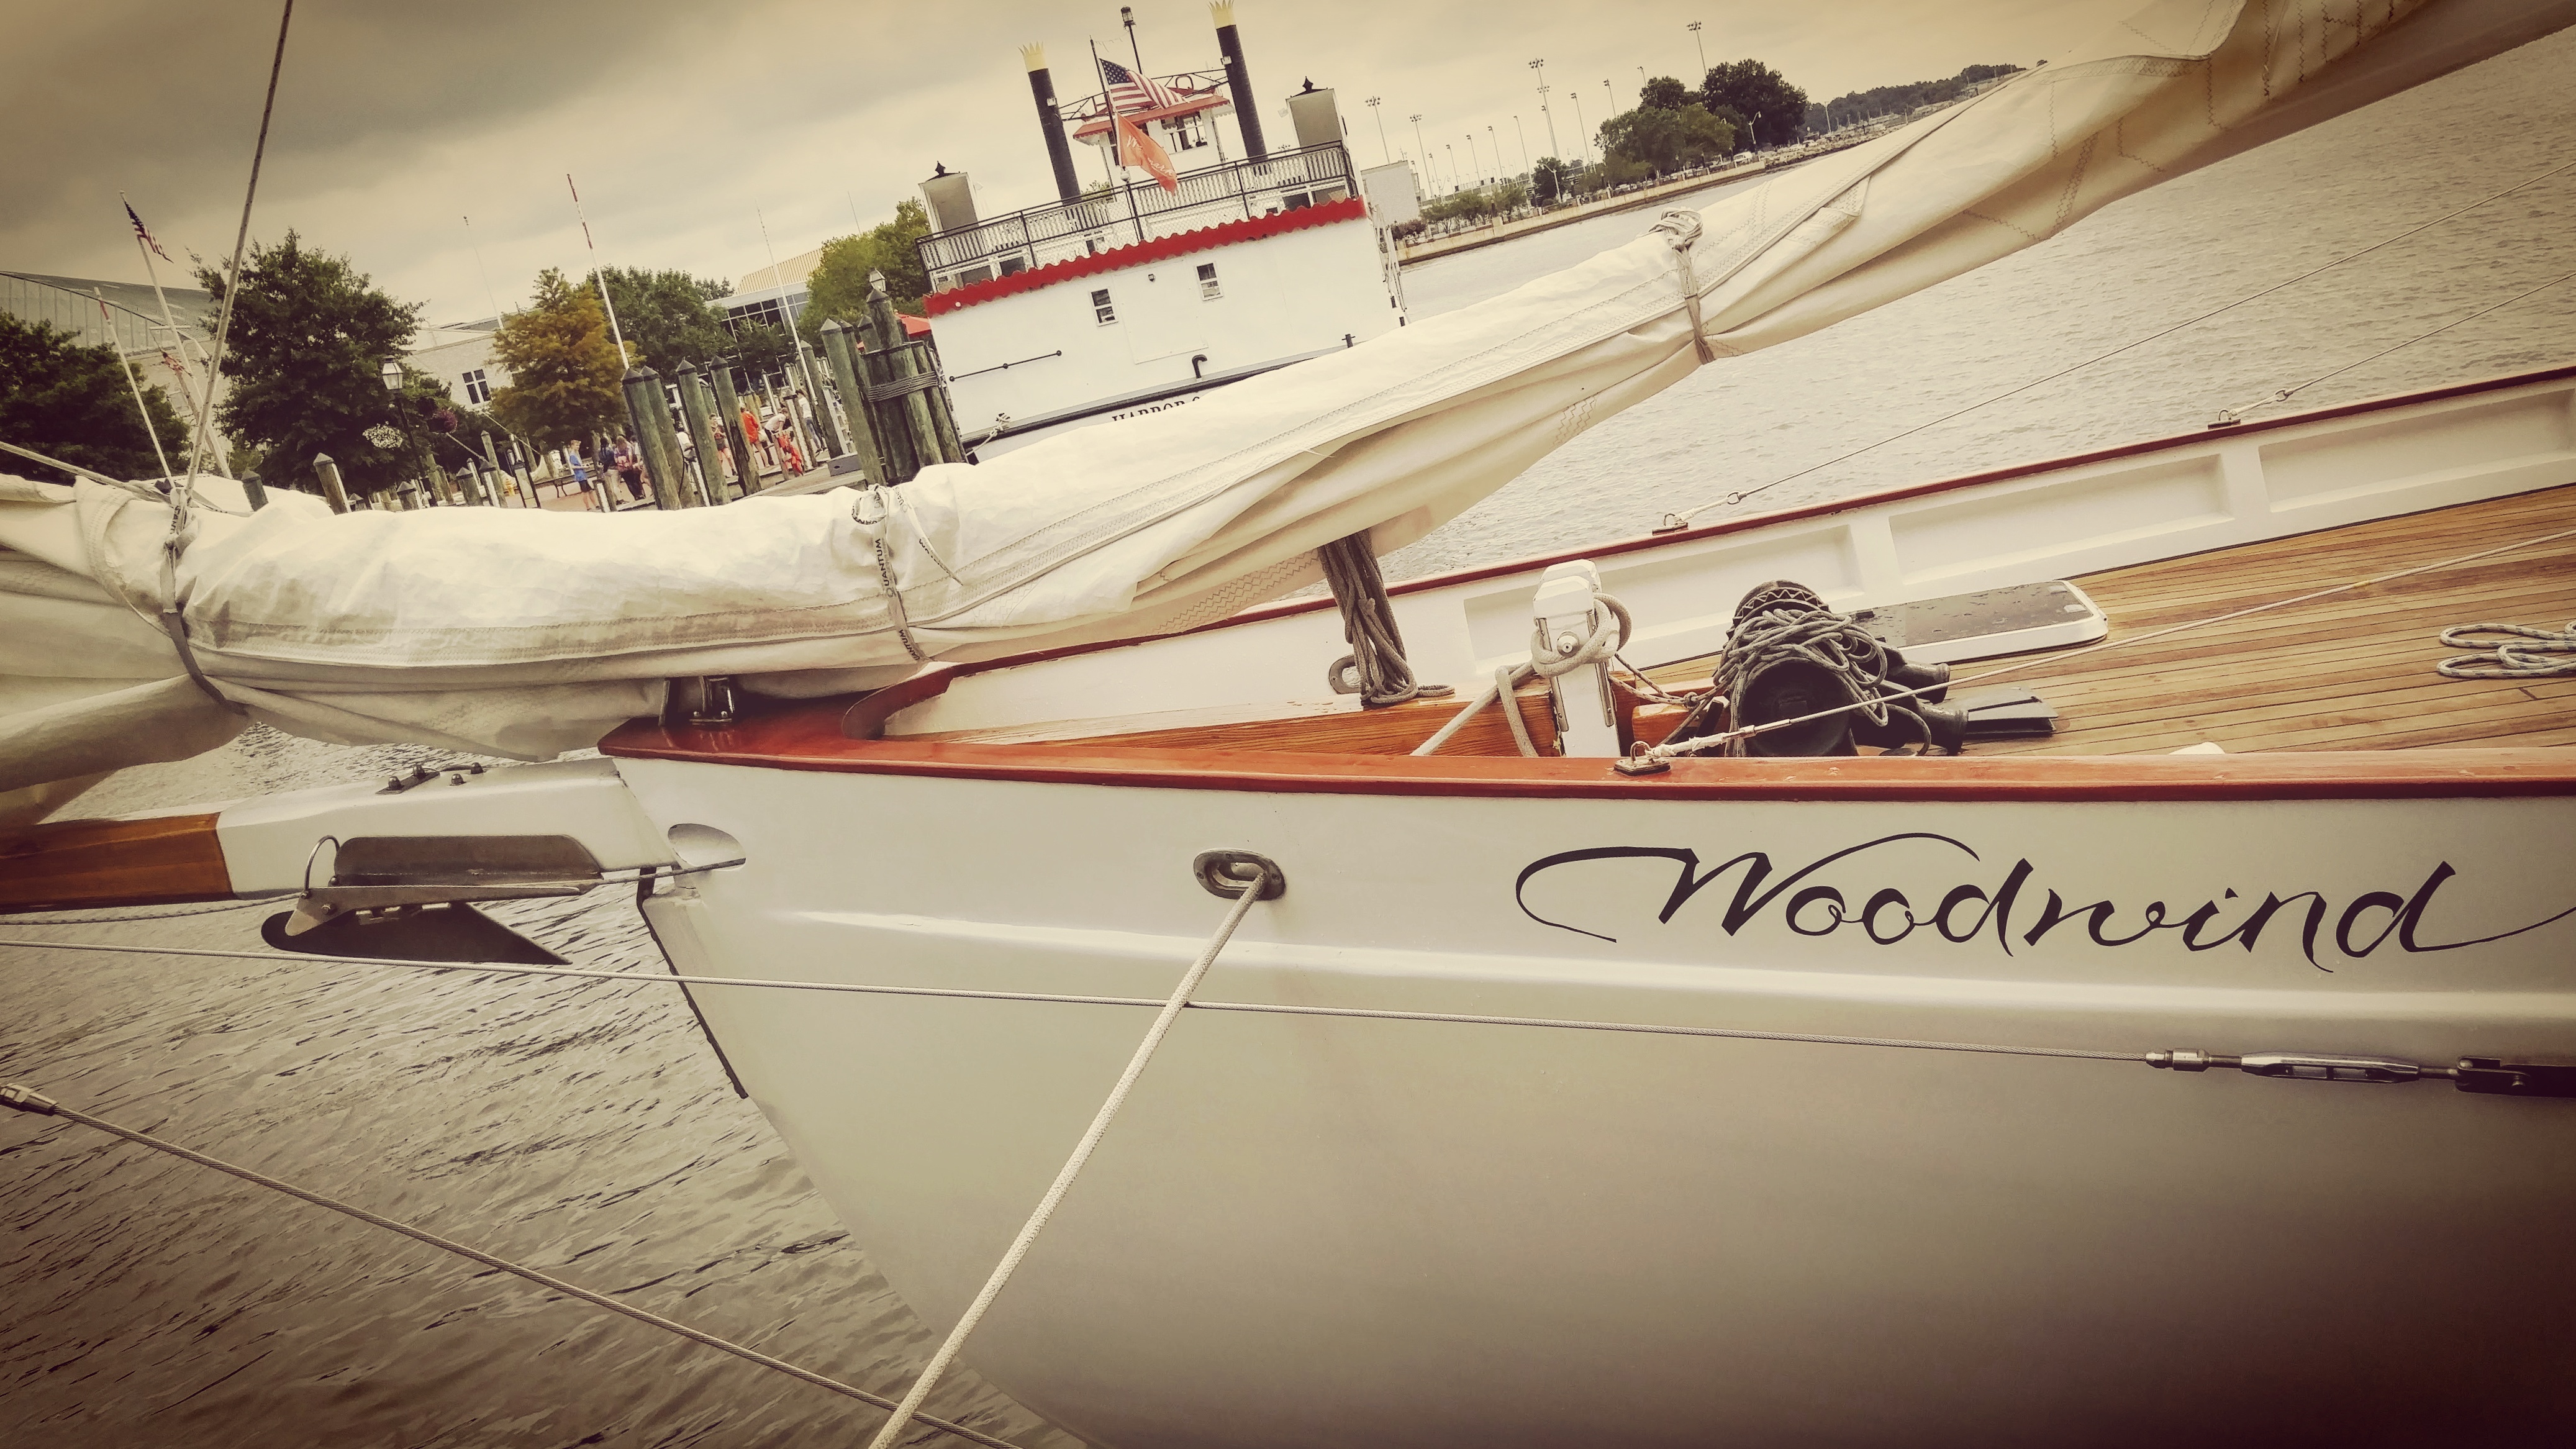 Bow of Schooner Woodwind with Annapolis Harbor Queen behind it